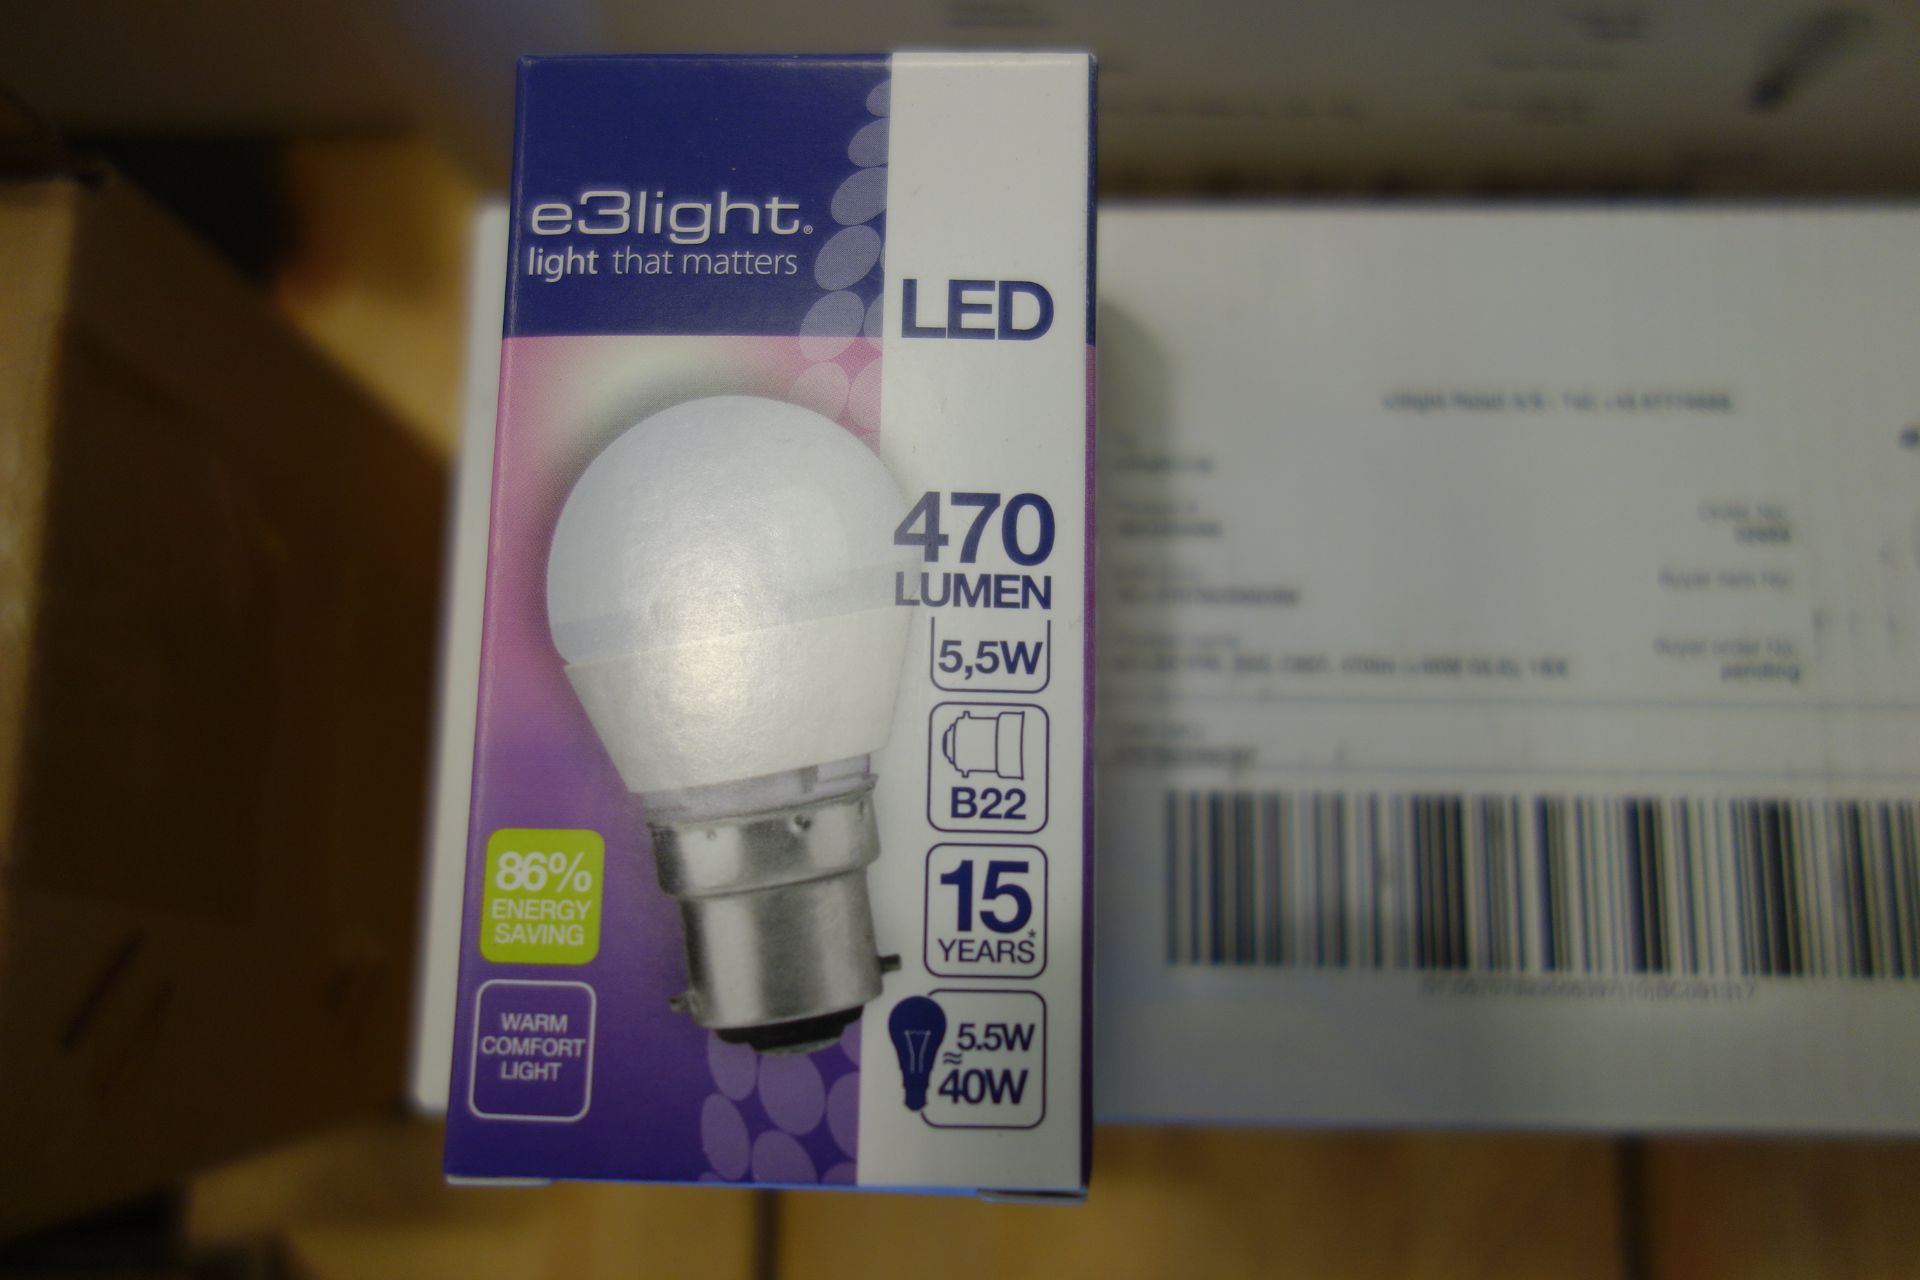 100 X E3Light 4603254006 470 Lumen 5.5W = 40W LED Lamp B22 Warm Comfort Light